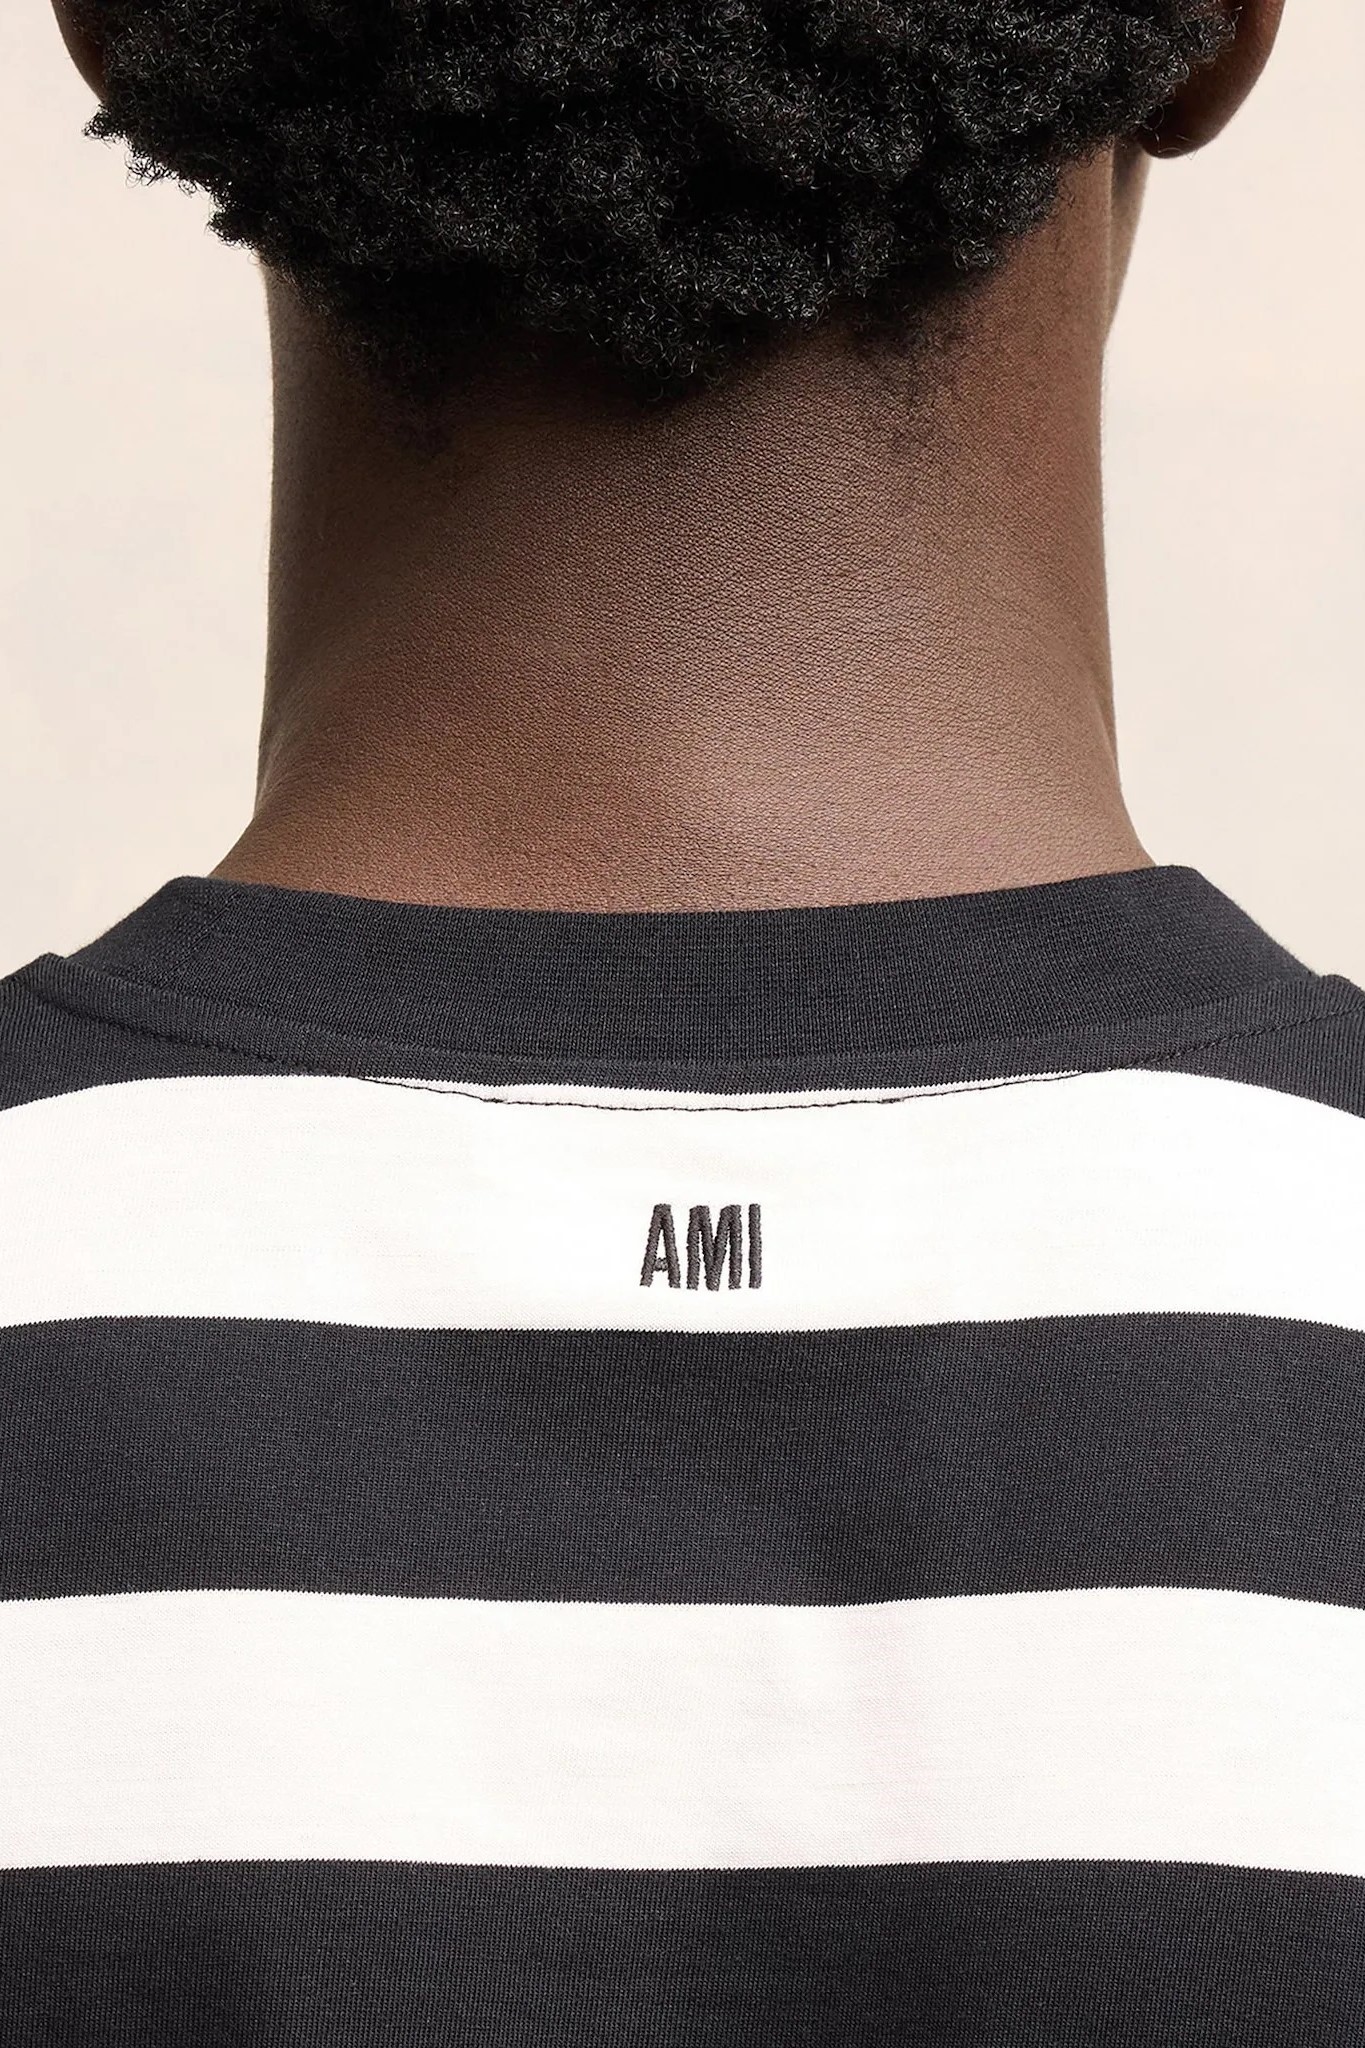 AMI PARIS de Coeur RayeT-Shirt in Black/White M